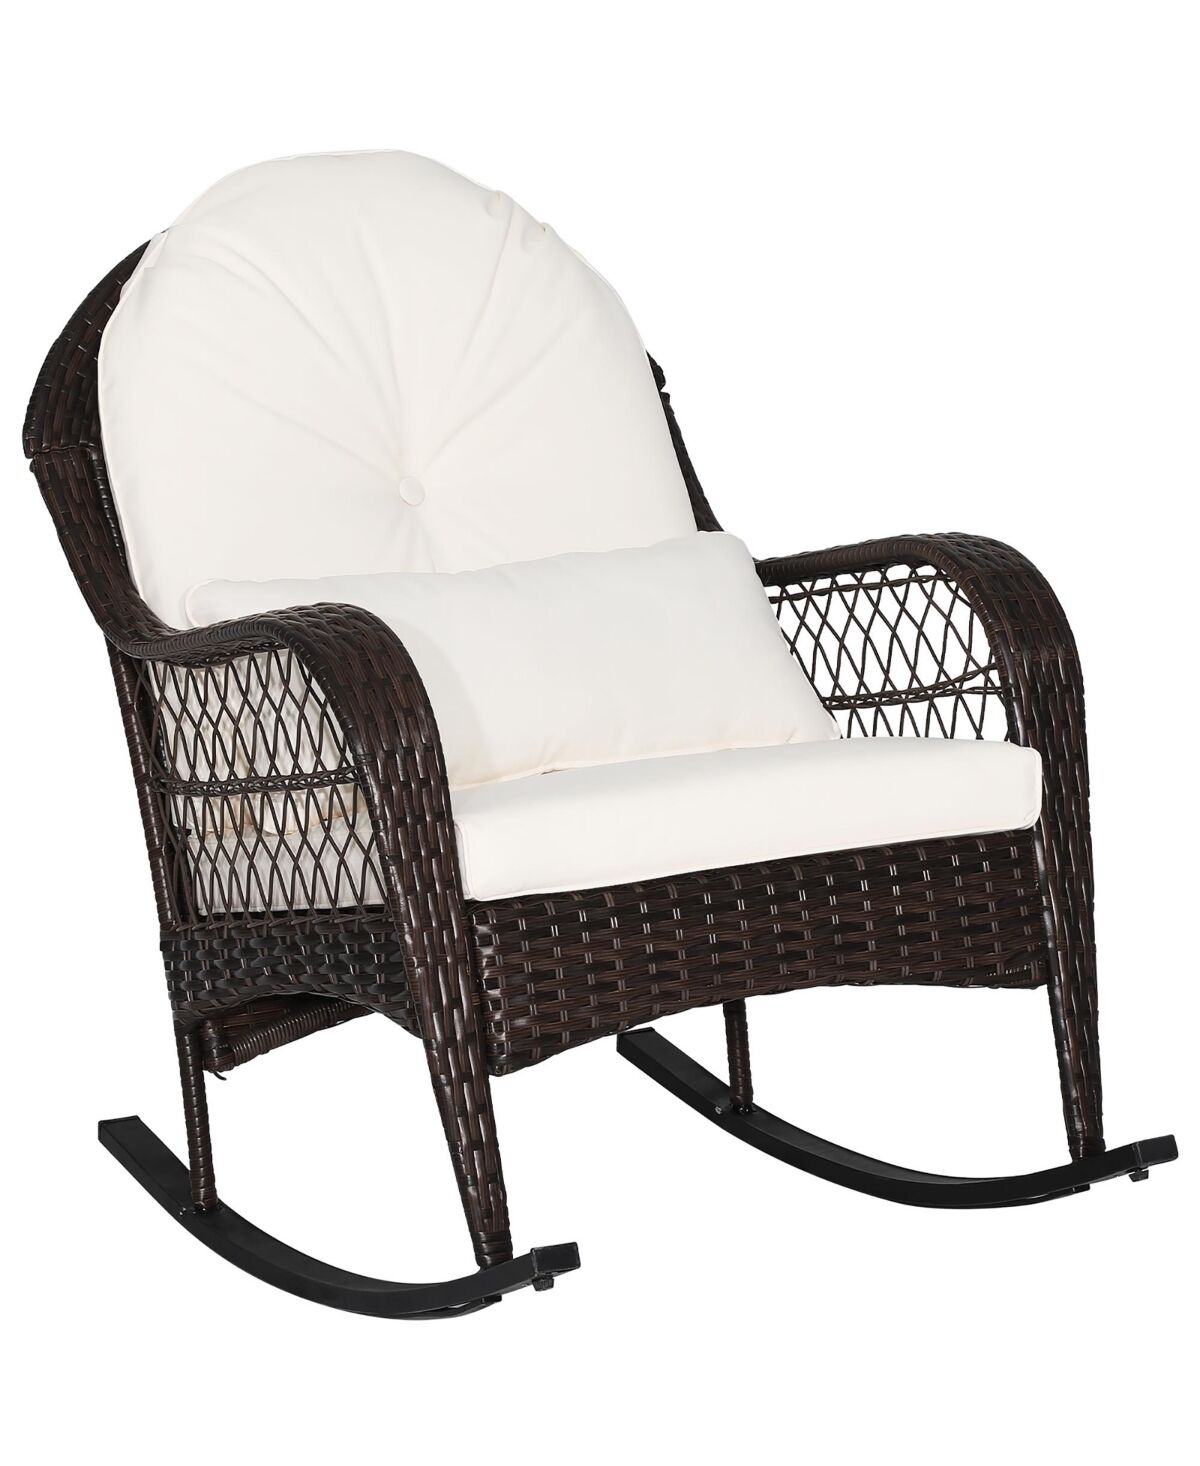 Costway Patio Wicker Rocking Chair W/Seat Back Cushions & Lumbar Pillow Porch - White